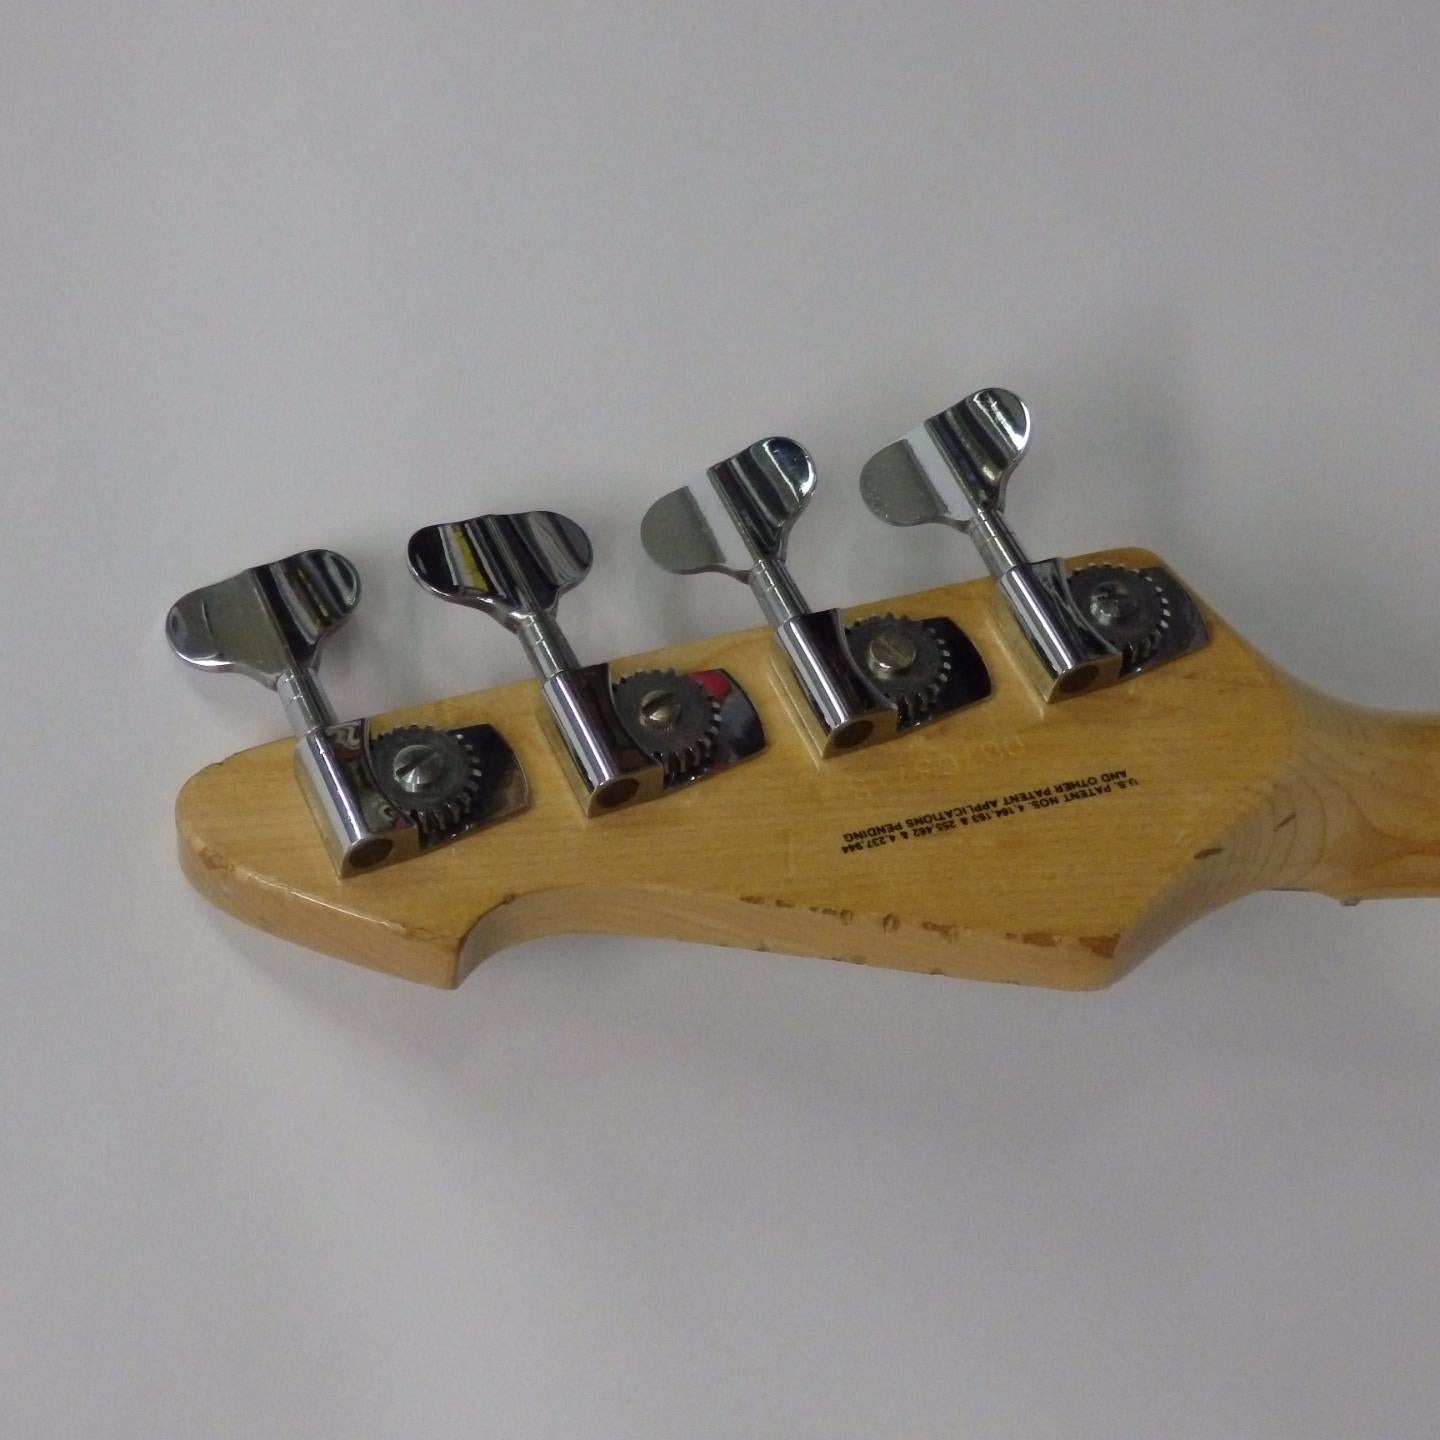 Chrome Peavey T 40 Bass Guitar with Original Hard Case